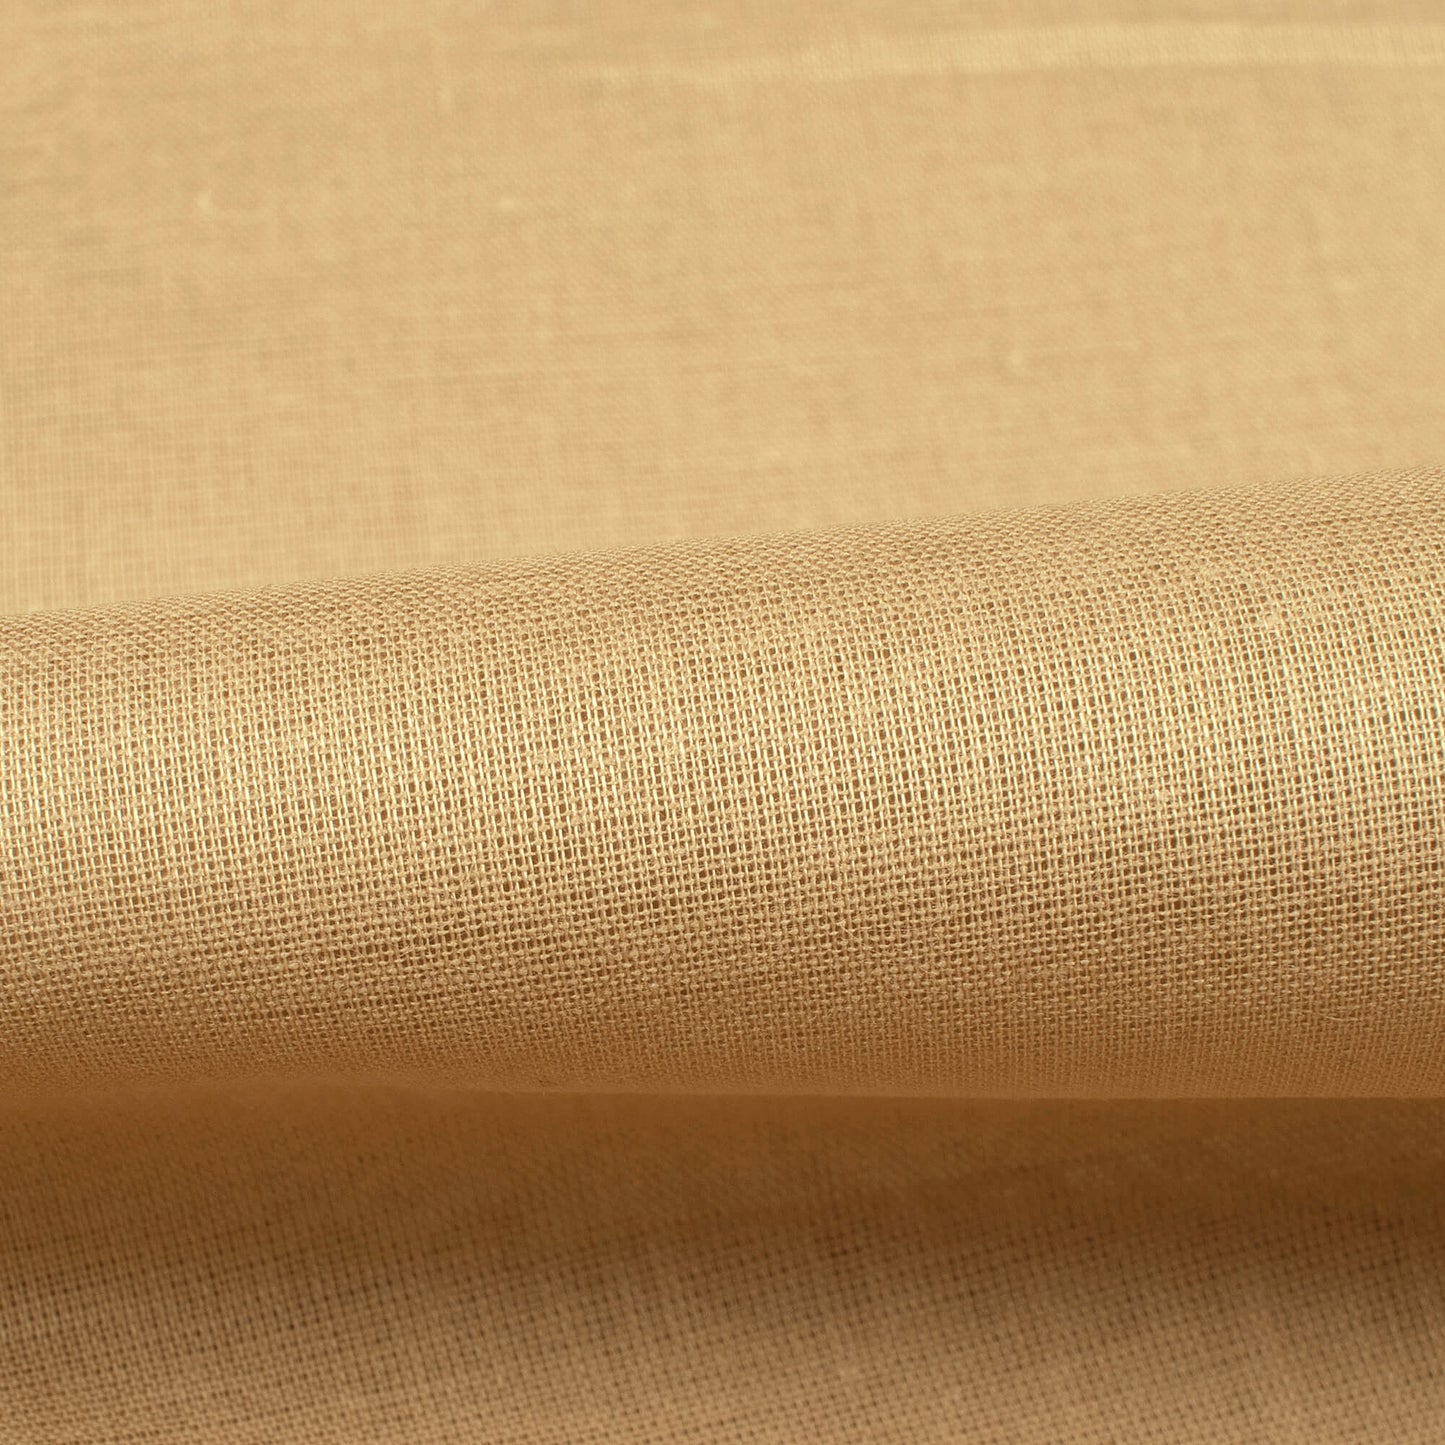 Khaki Brown Plain Cotton Mulmul Fabric